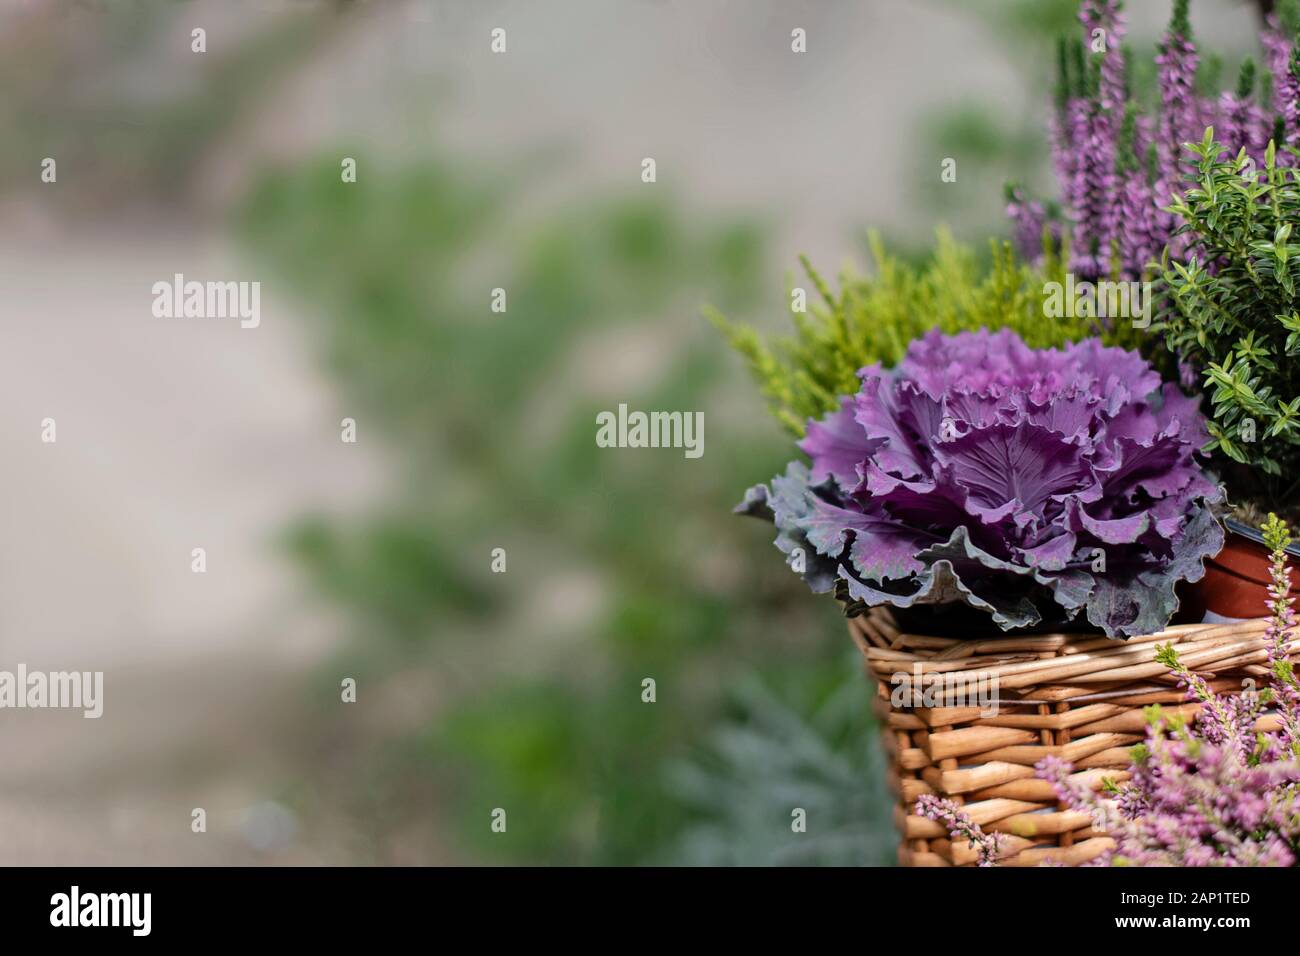 Autumn decoration plants background. Fresh violet ornamental cabbage plant (brassica oleracea) and heather plant (calluna vulgris) flowering in decora Stock Photo